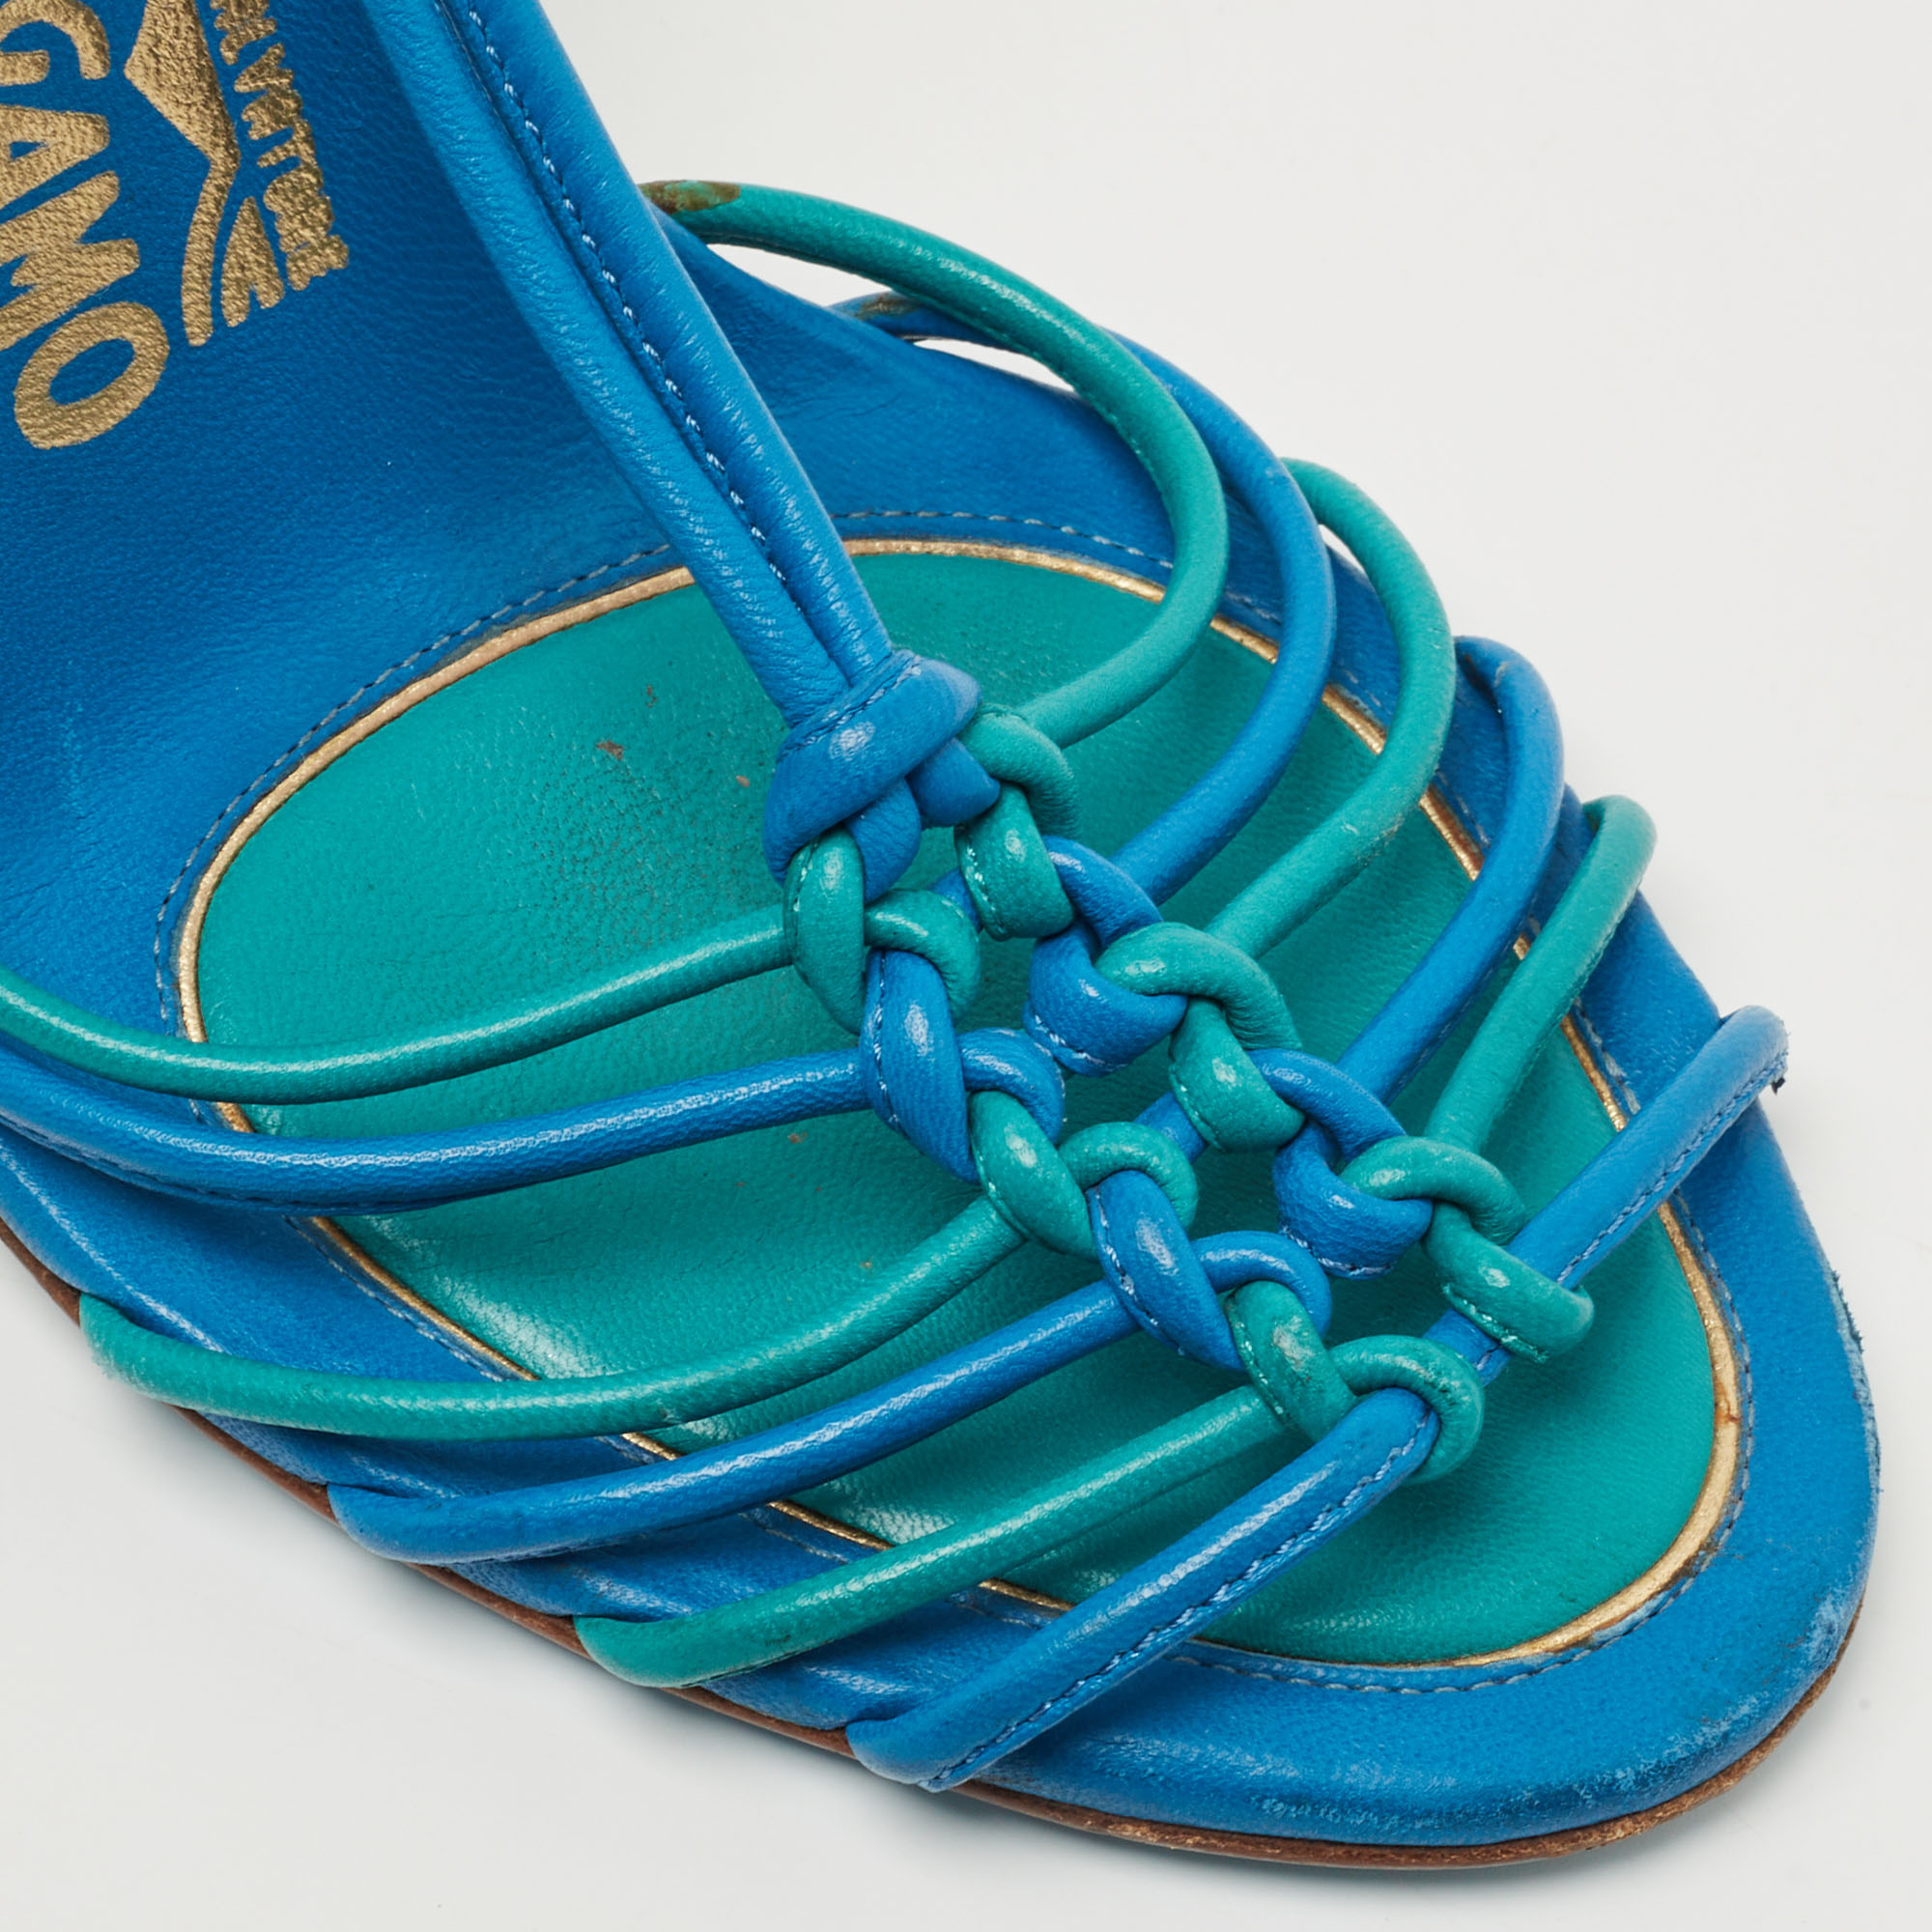 Salvatore Ferragamo Blue Leather Ankle Strap Sandals Size 38.5